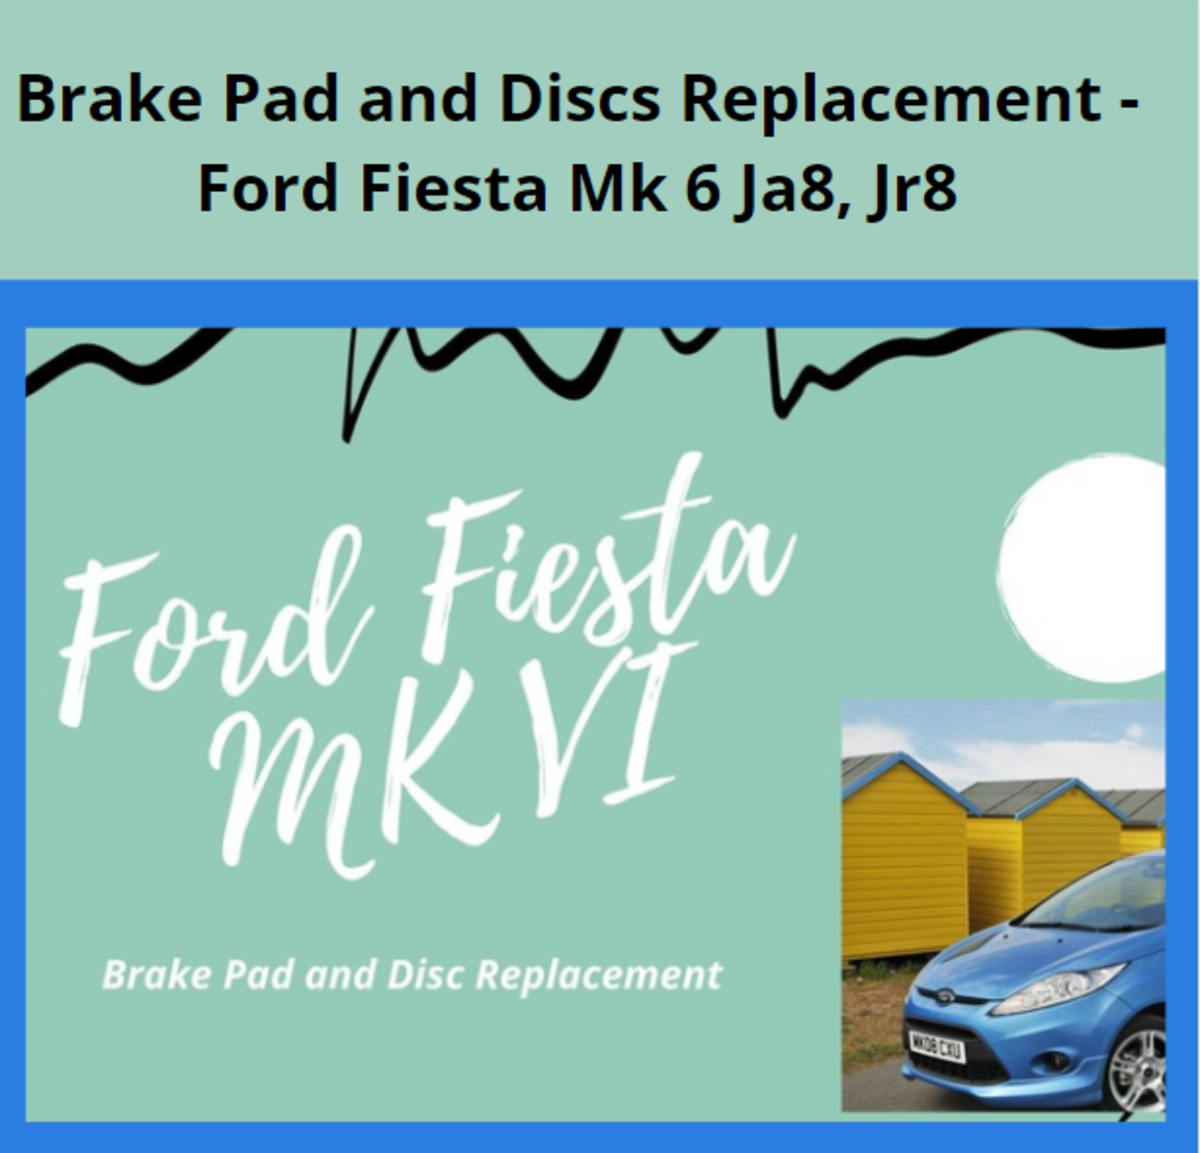 Brake Pad and Discs Replacement - Ford Fiesta Mk 6 Ja8, Jr8